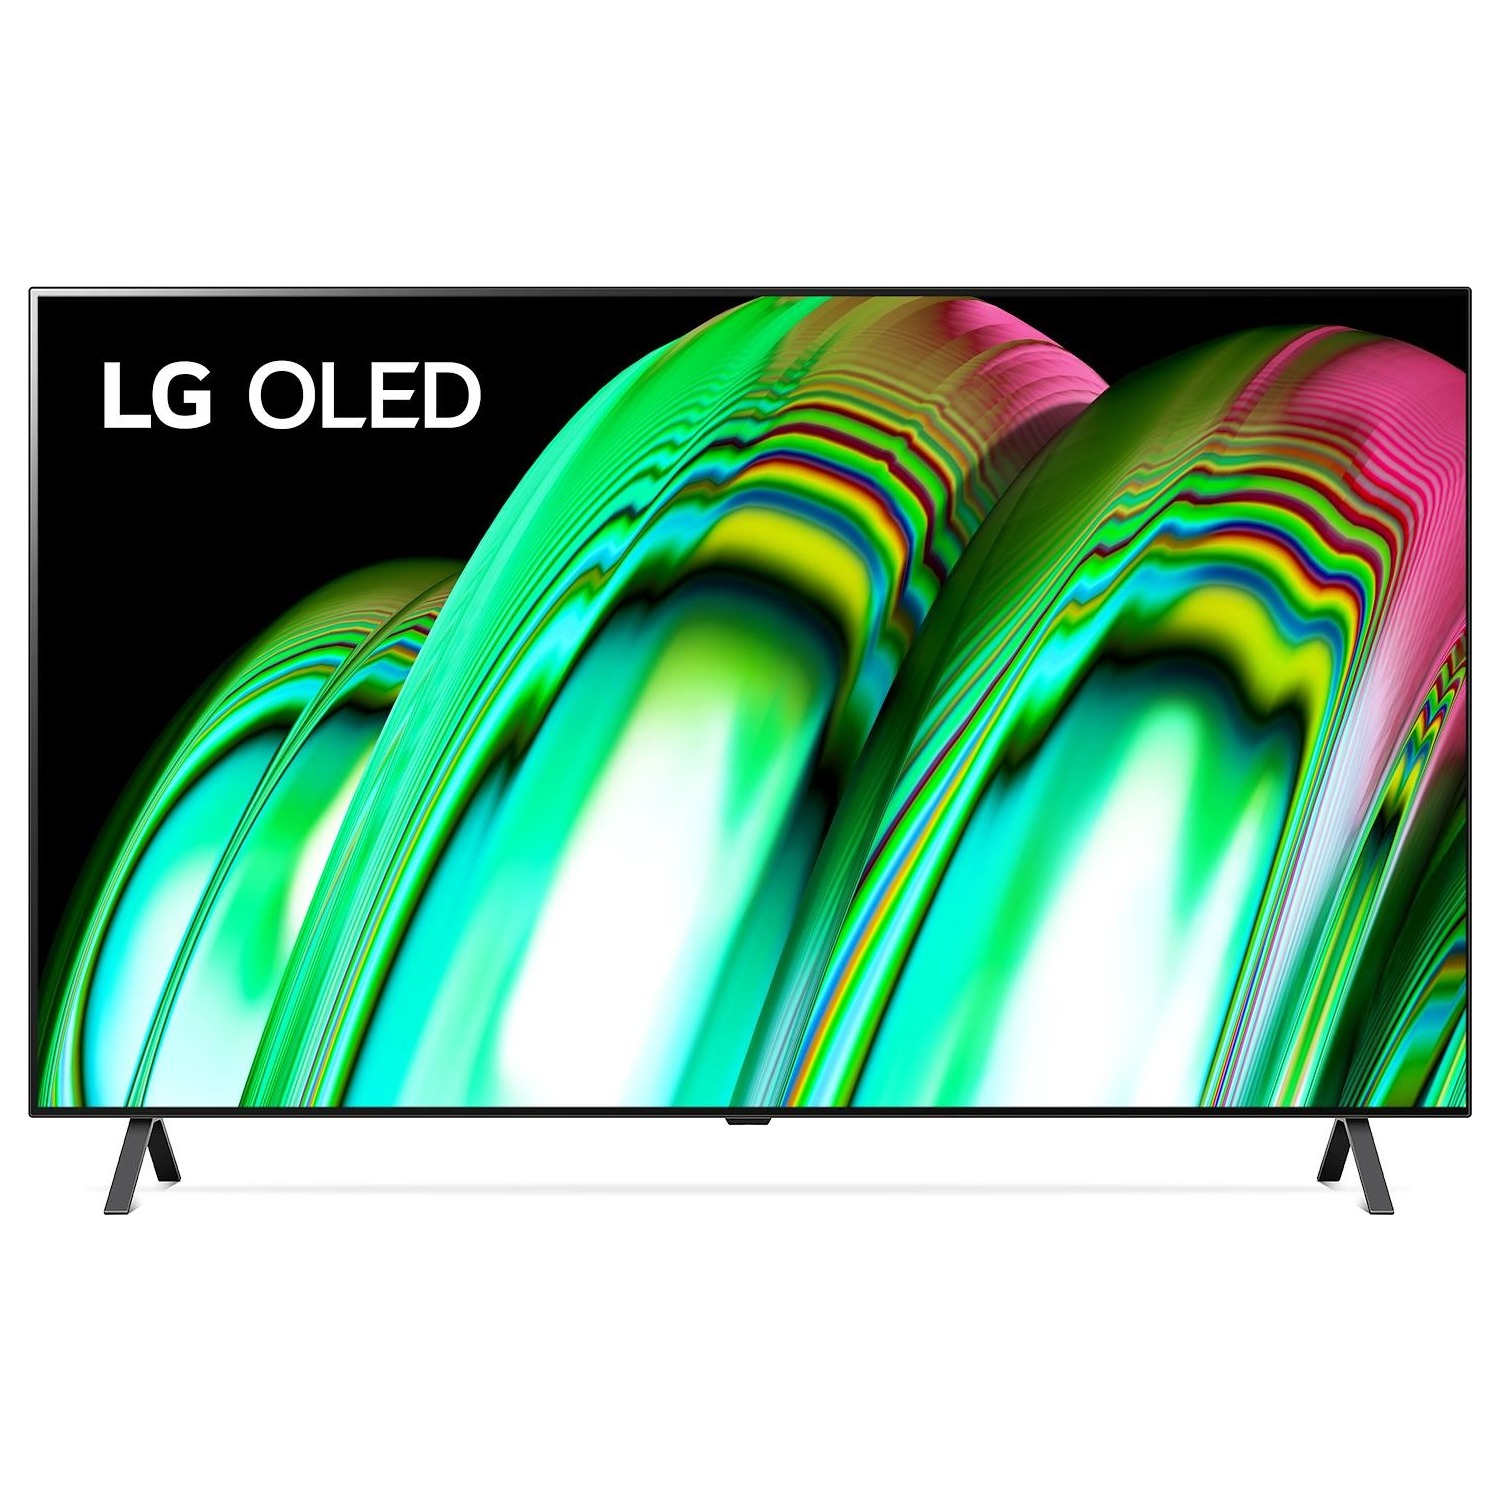 Immagine per TV OLED UHD 4K Smart LG OLED65A26 da DIMOStore